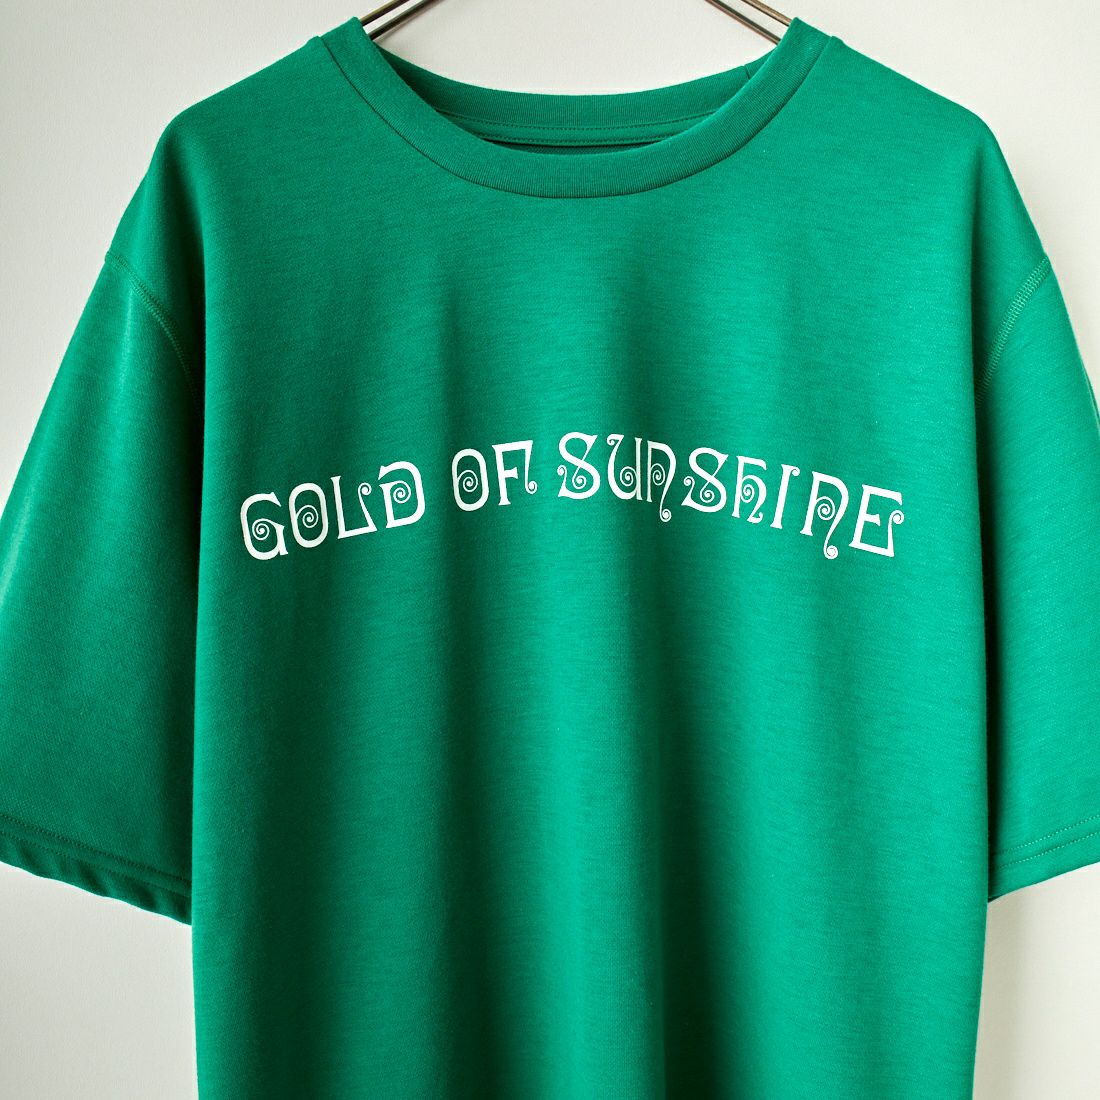 South2West8 [サウスツーウエストエイト] GOLD OF SUNSHINE クルーネックTシャツ [MR836] A GREEN